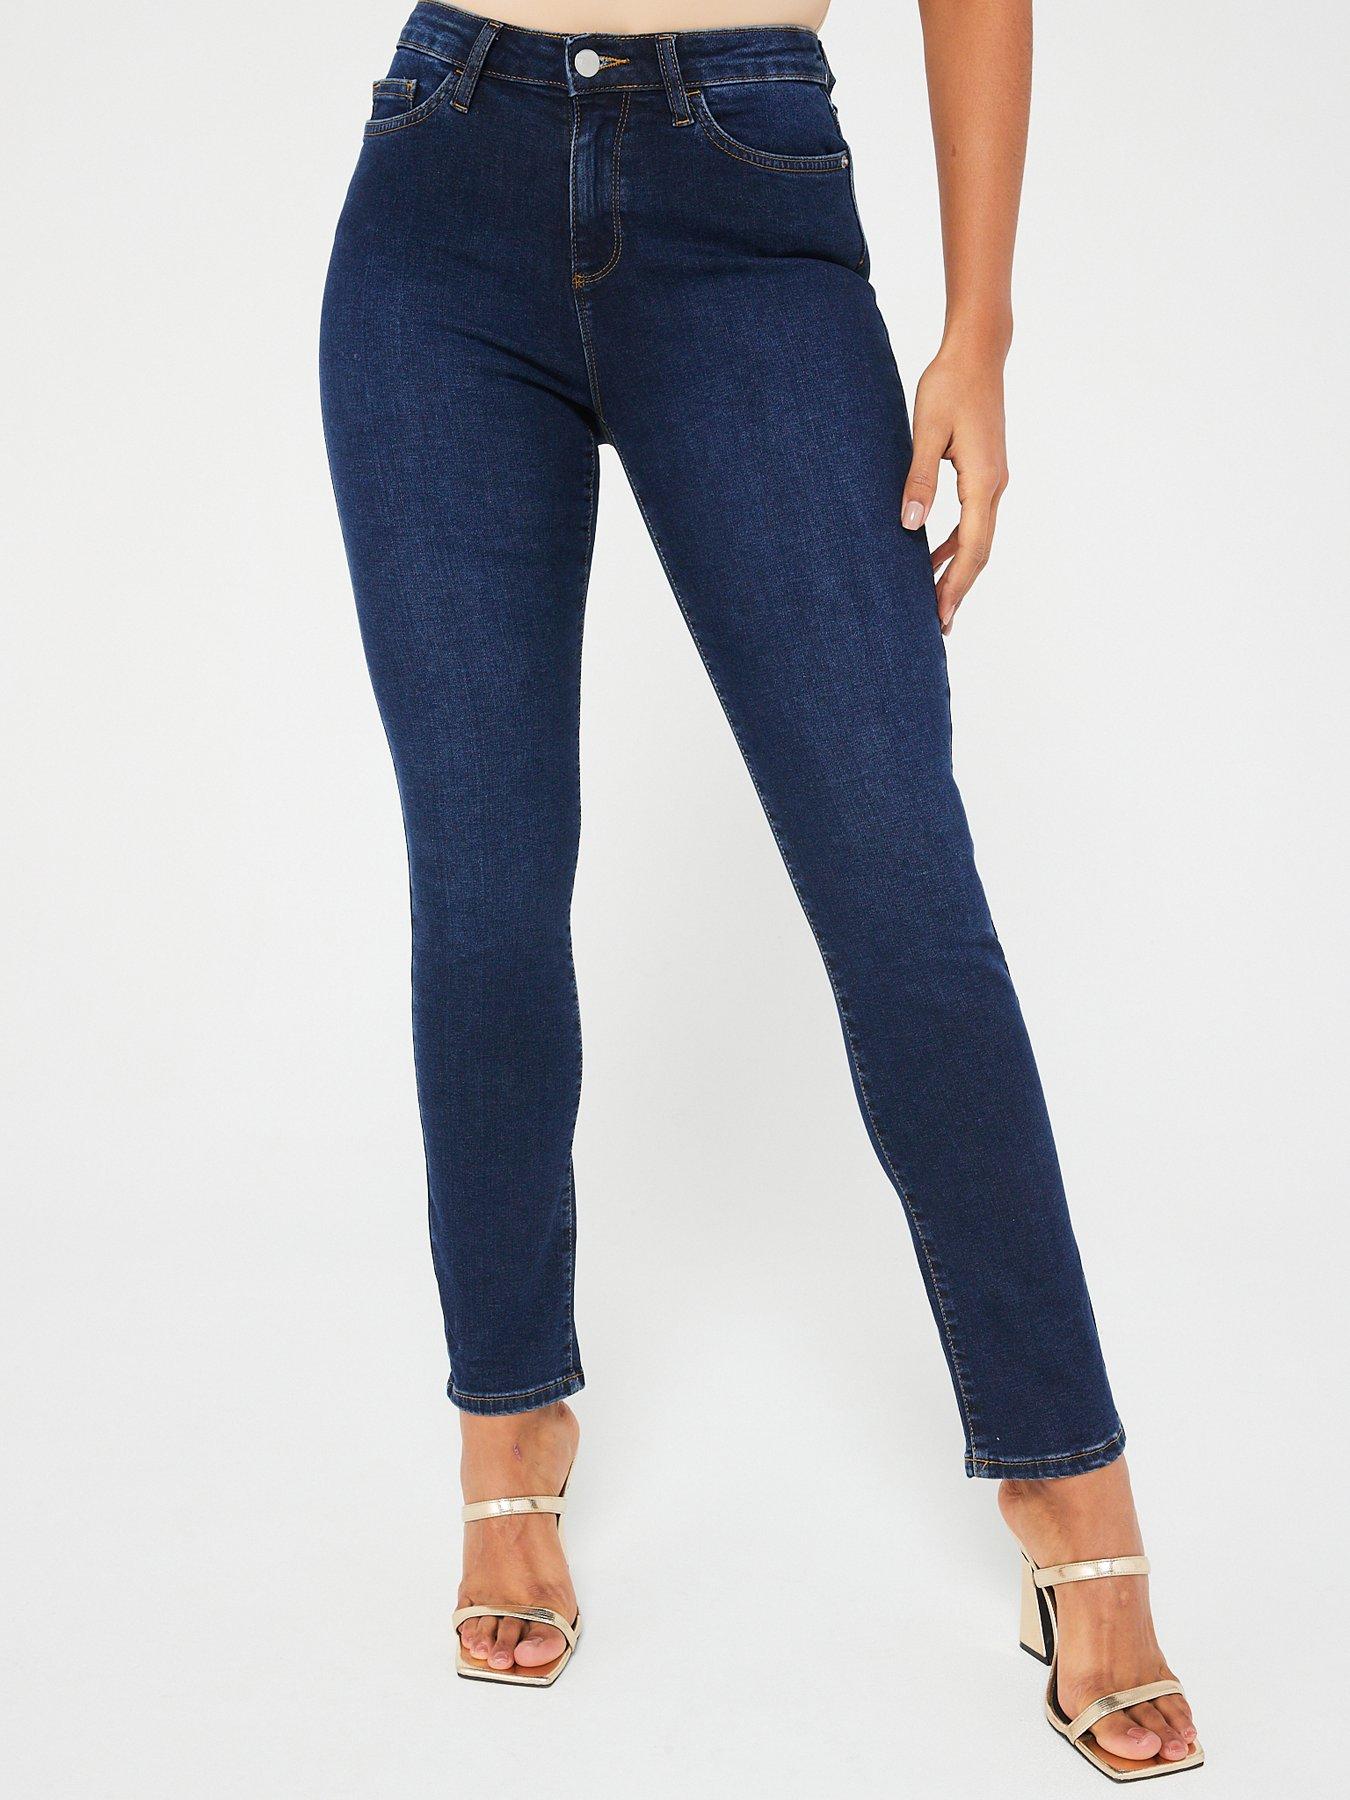 low rise designer jeans